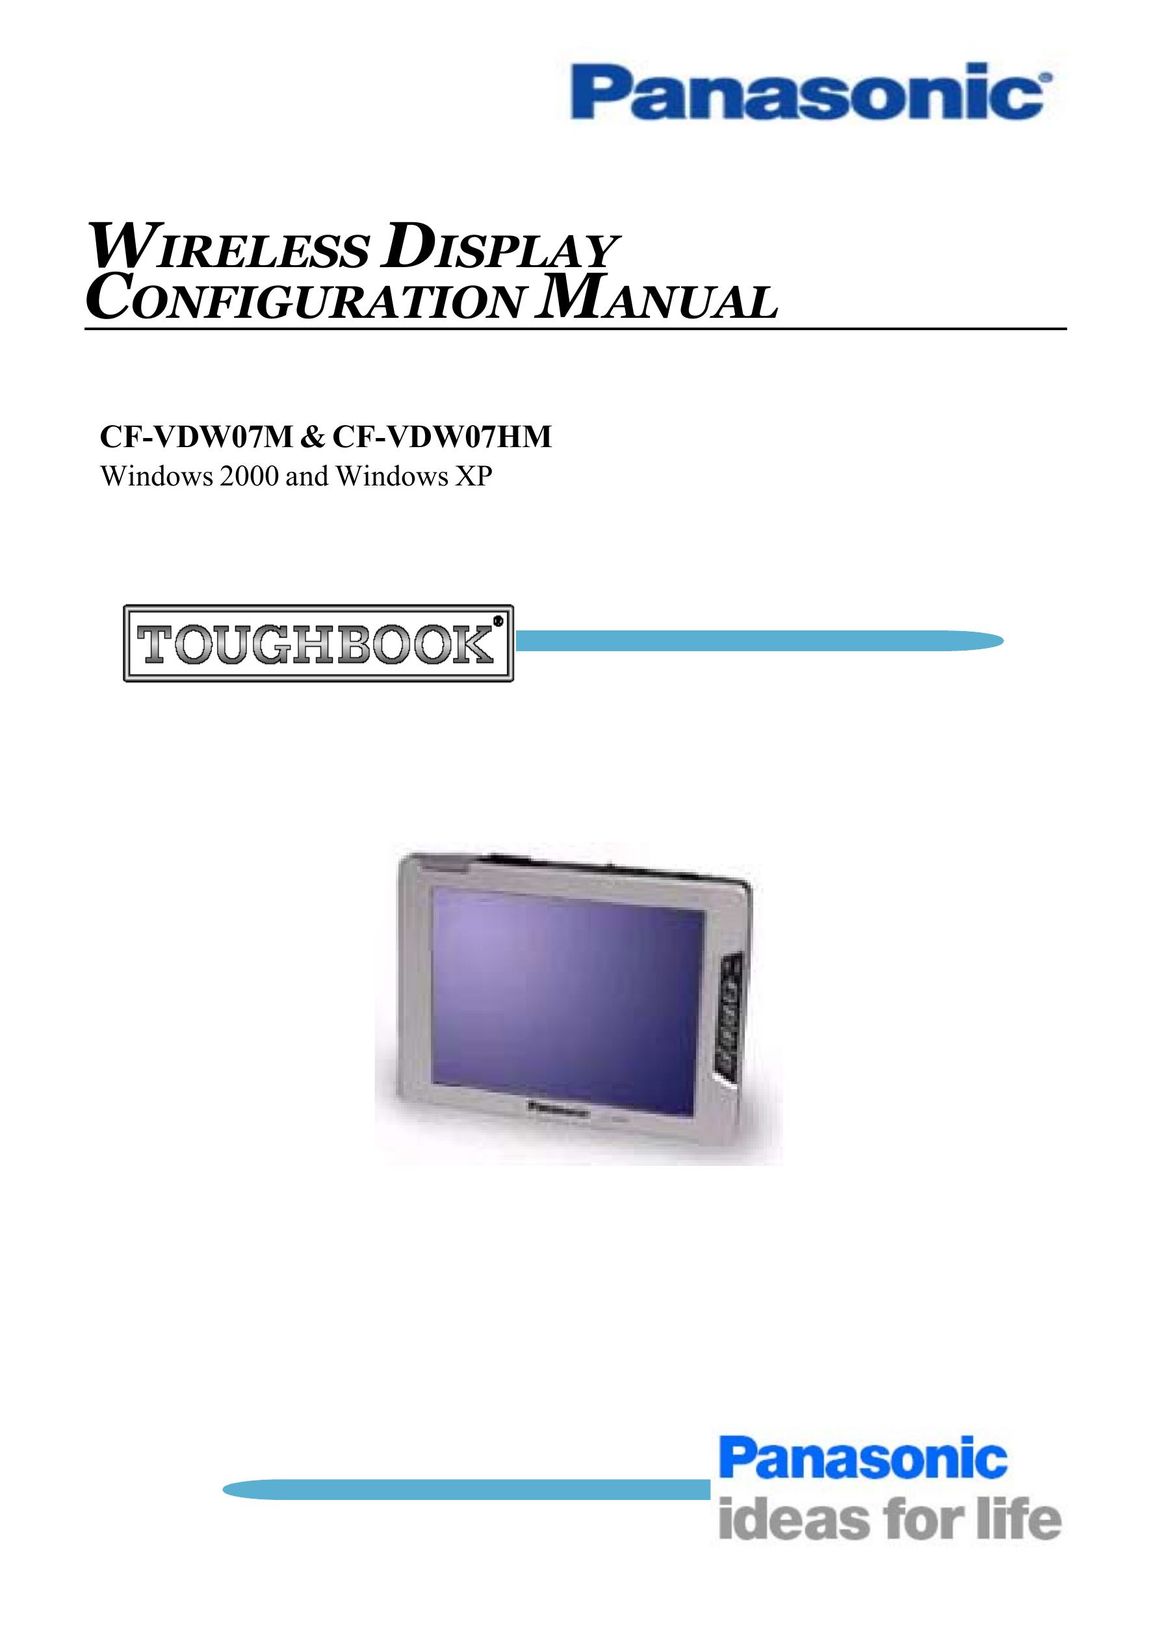 Panasonic CF-VDW07M eBook Reader User Manual